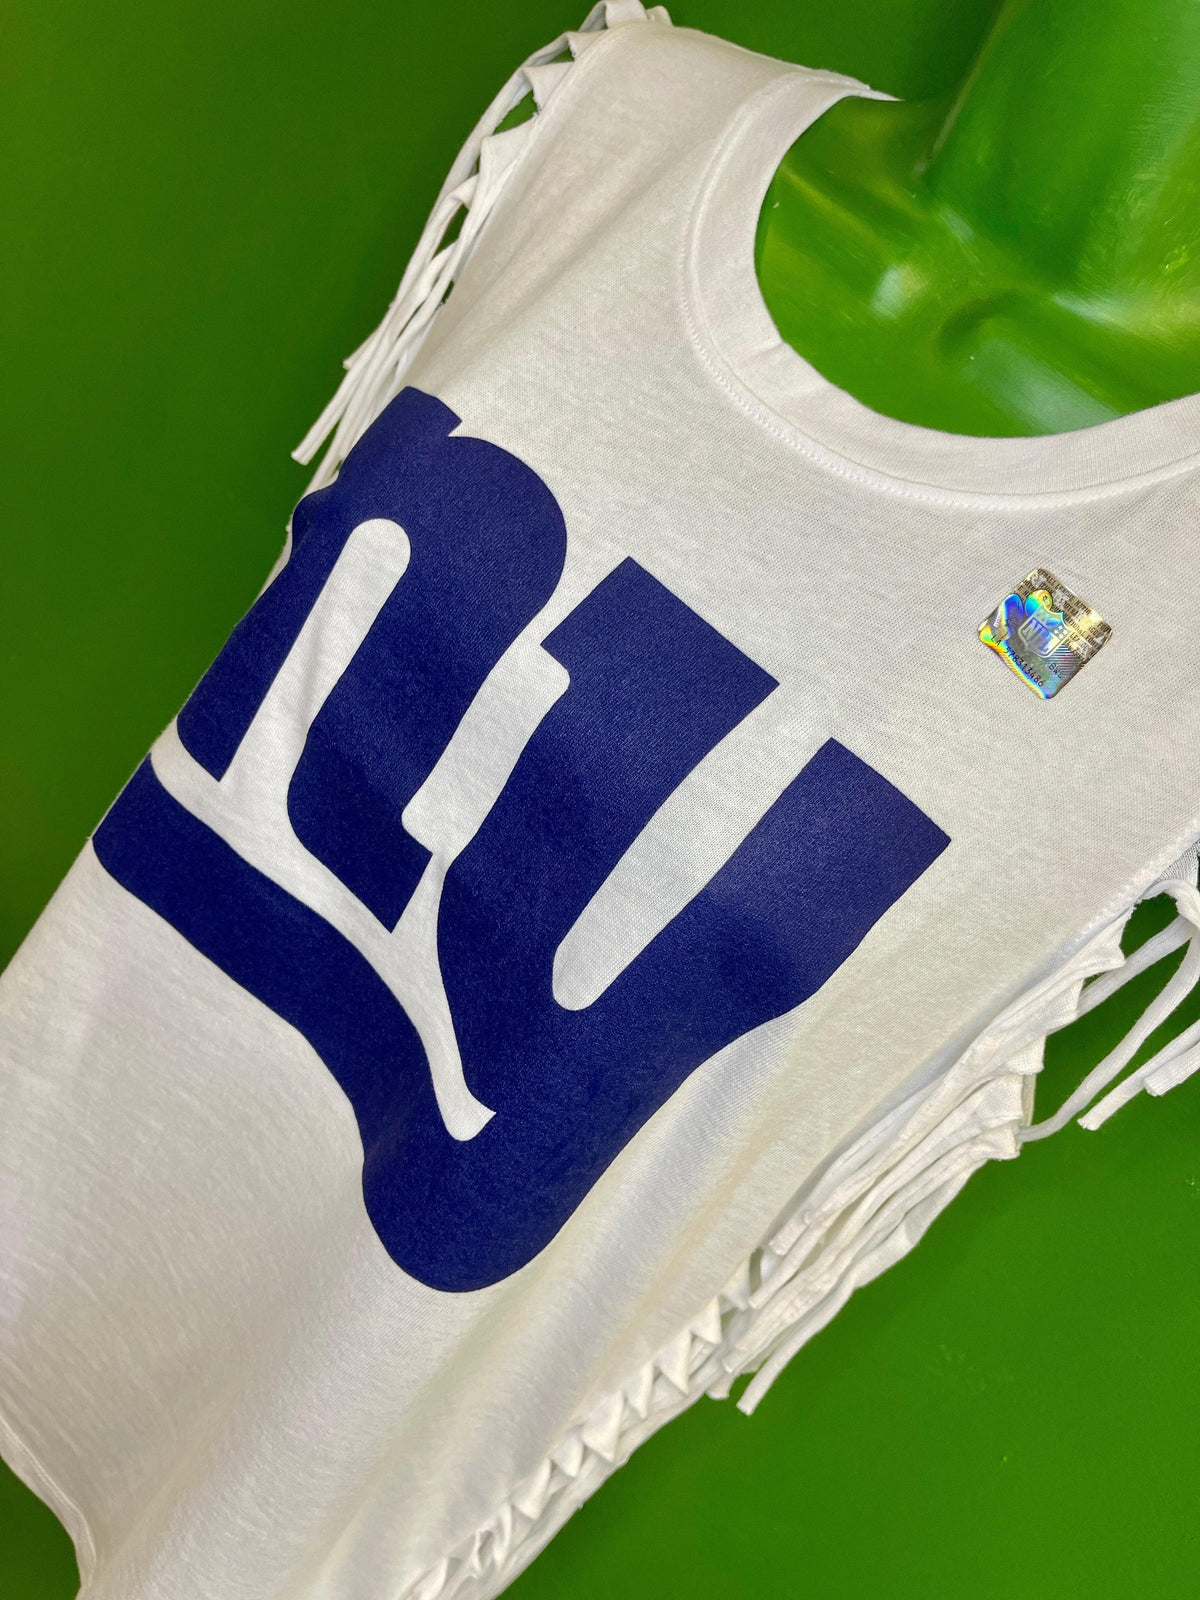 NFL New York Giants Junk Food Fringe Sleeveless T-Shirt Women's Small NWT